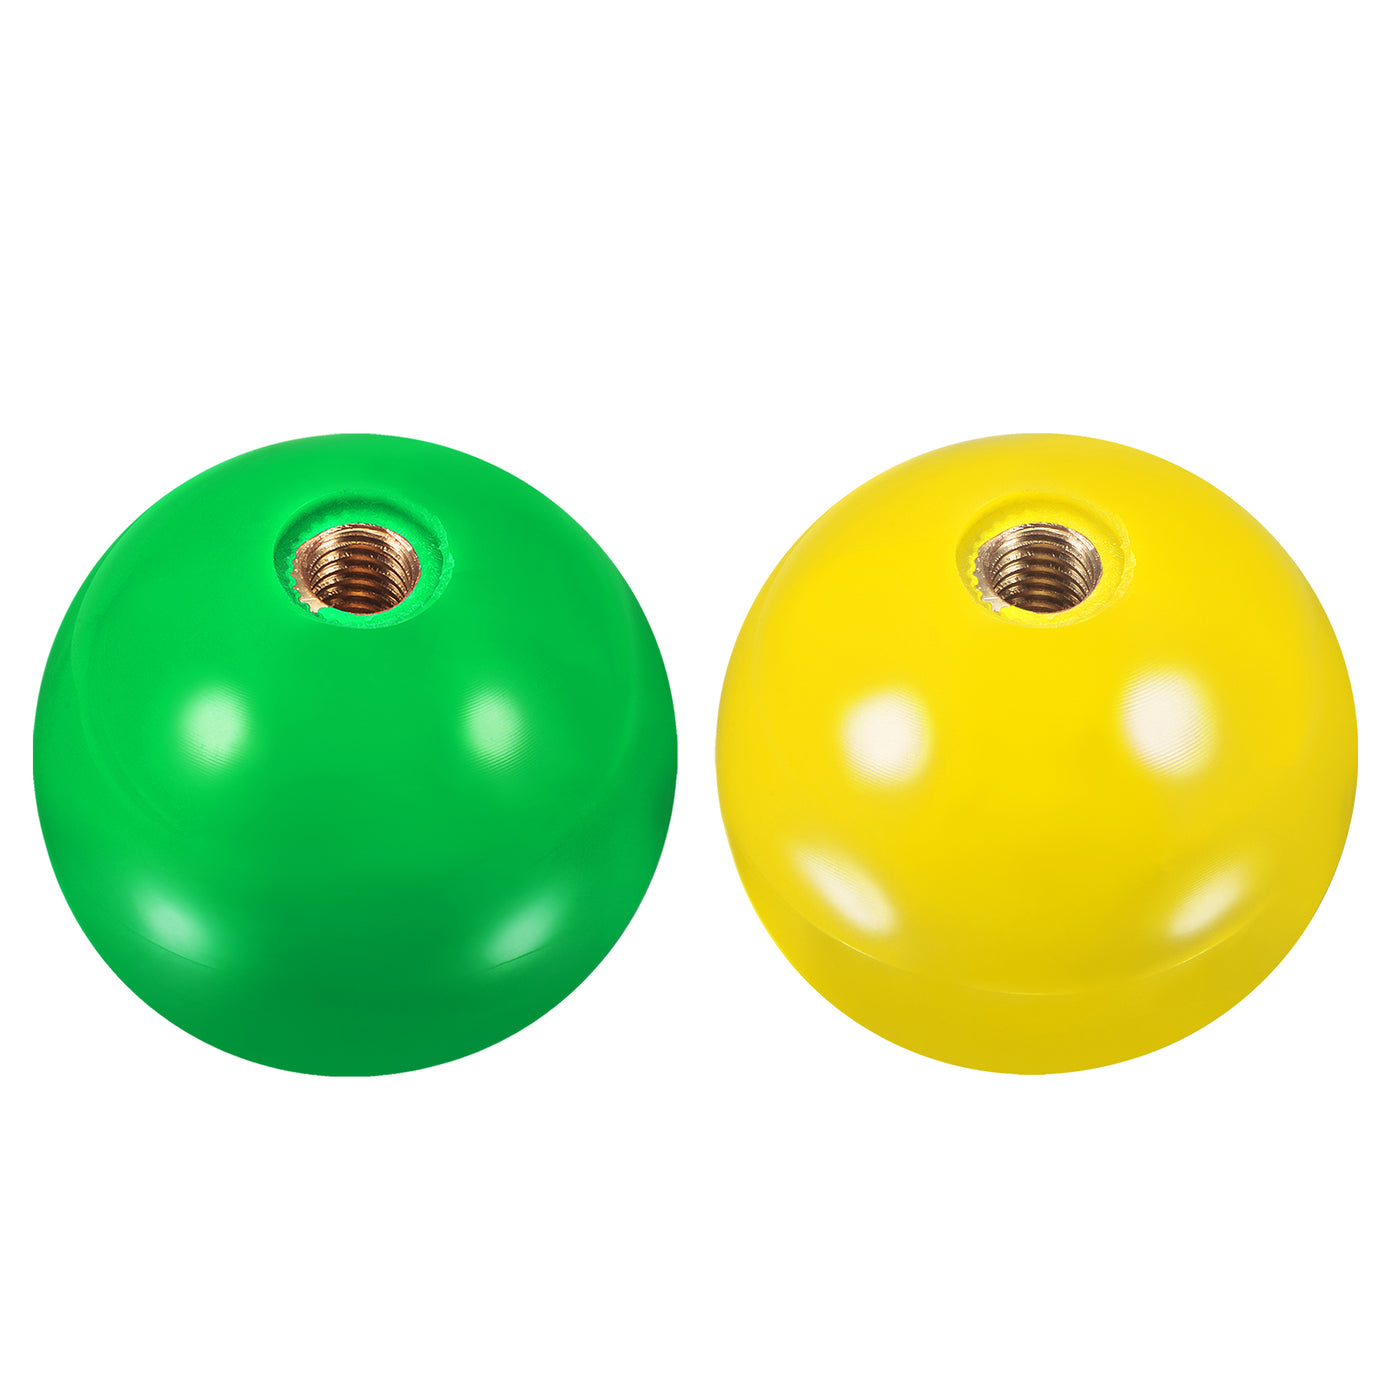 uxcell Uxcell Joystick Head Rocker Ball Top Handle Arcade Game Replacement Green/Yellow